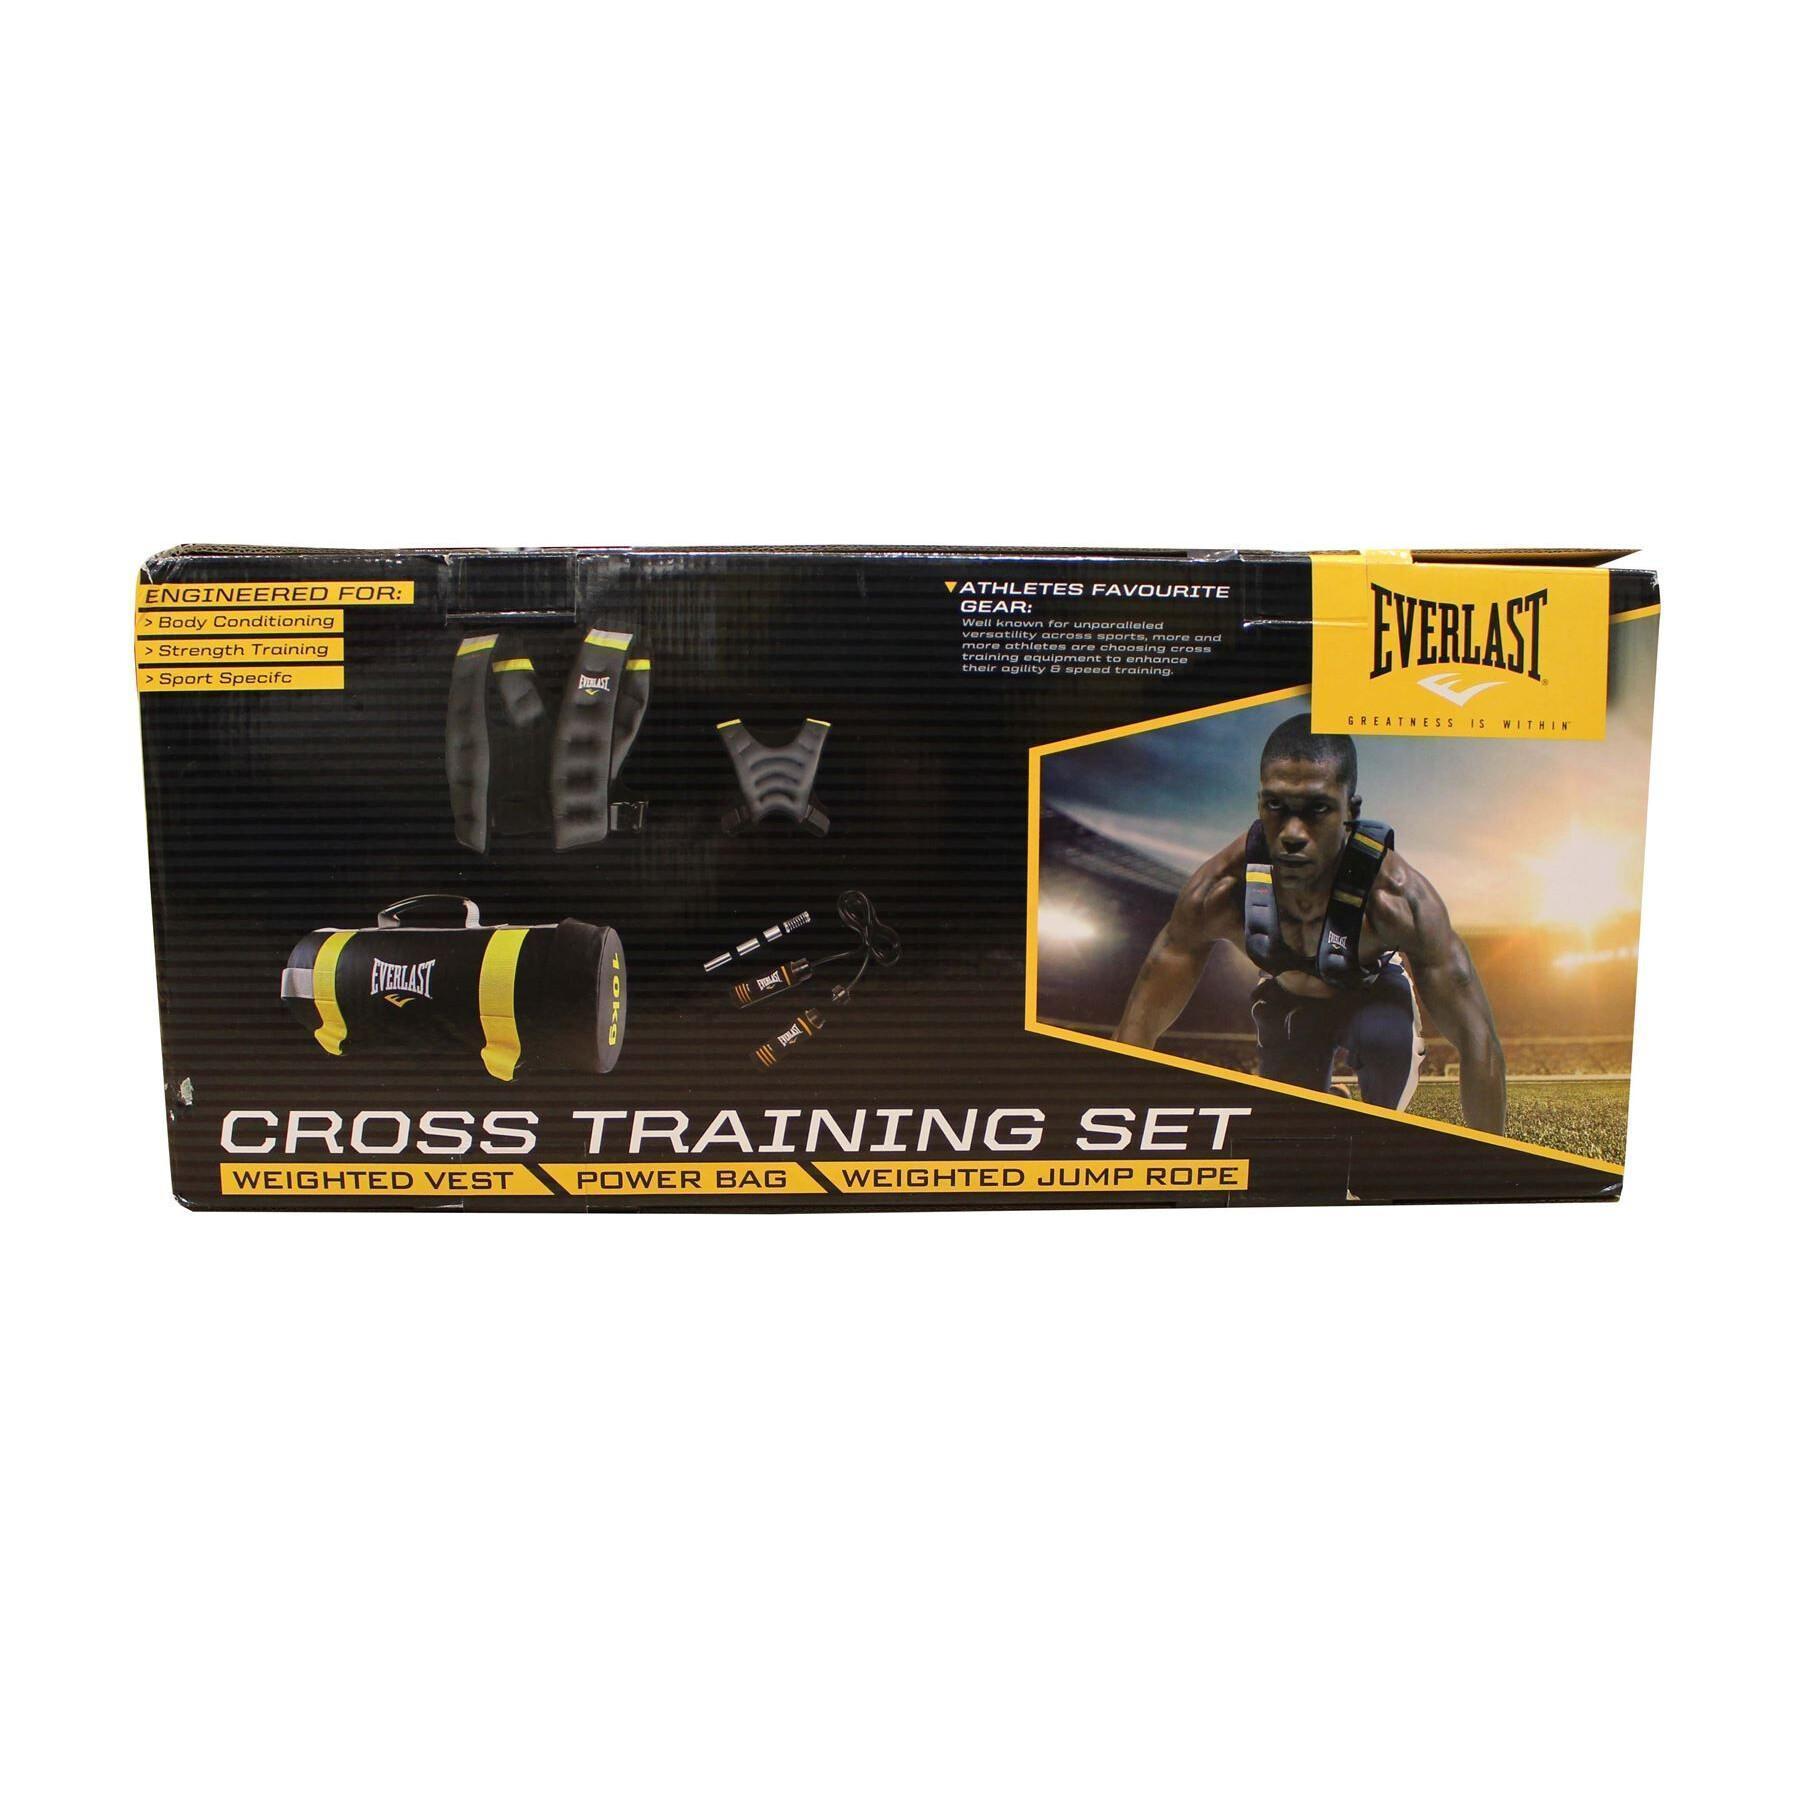 Cross training-kit